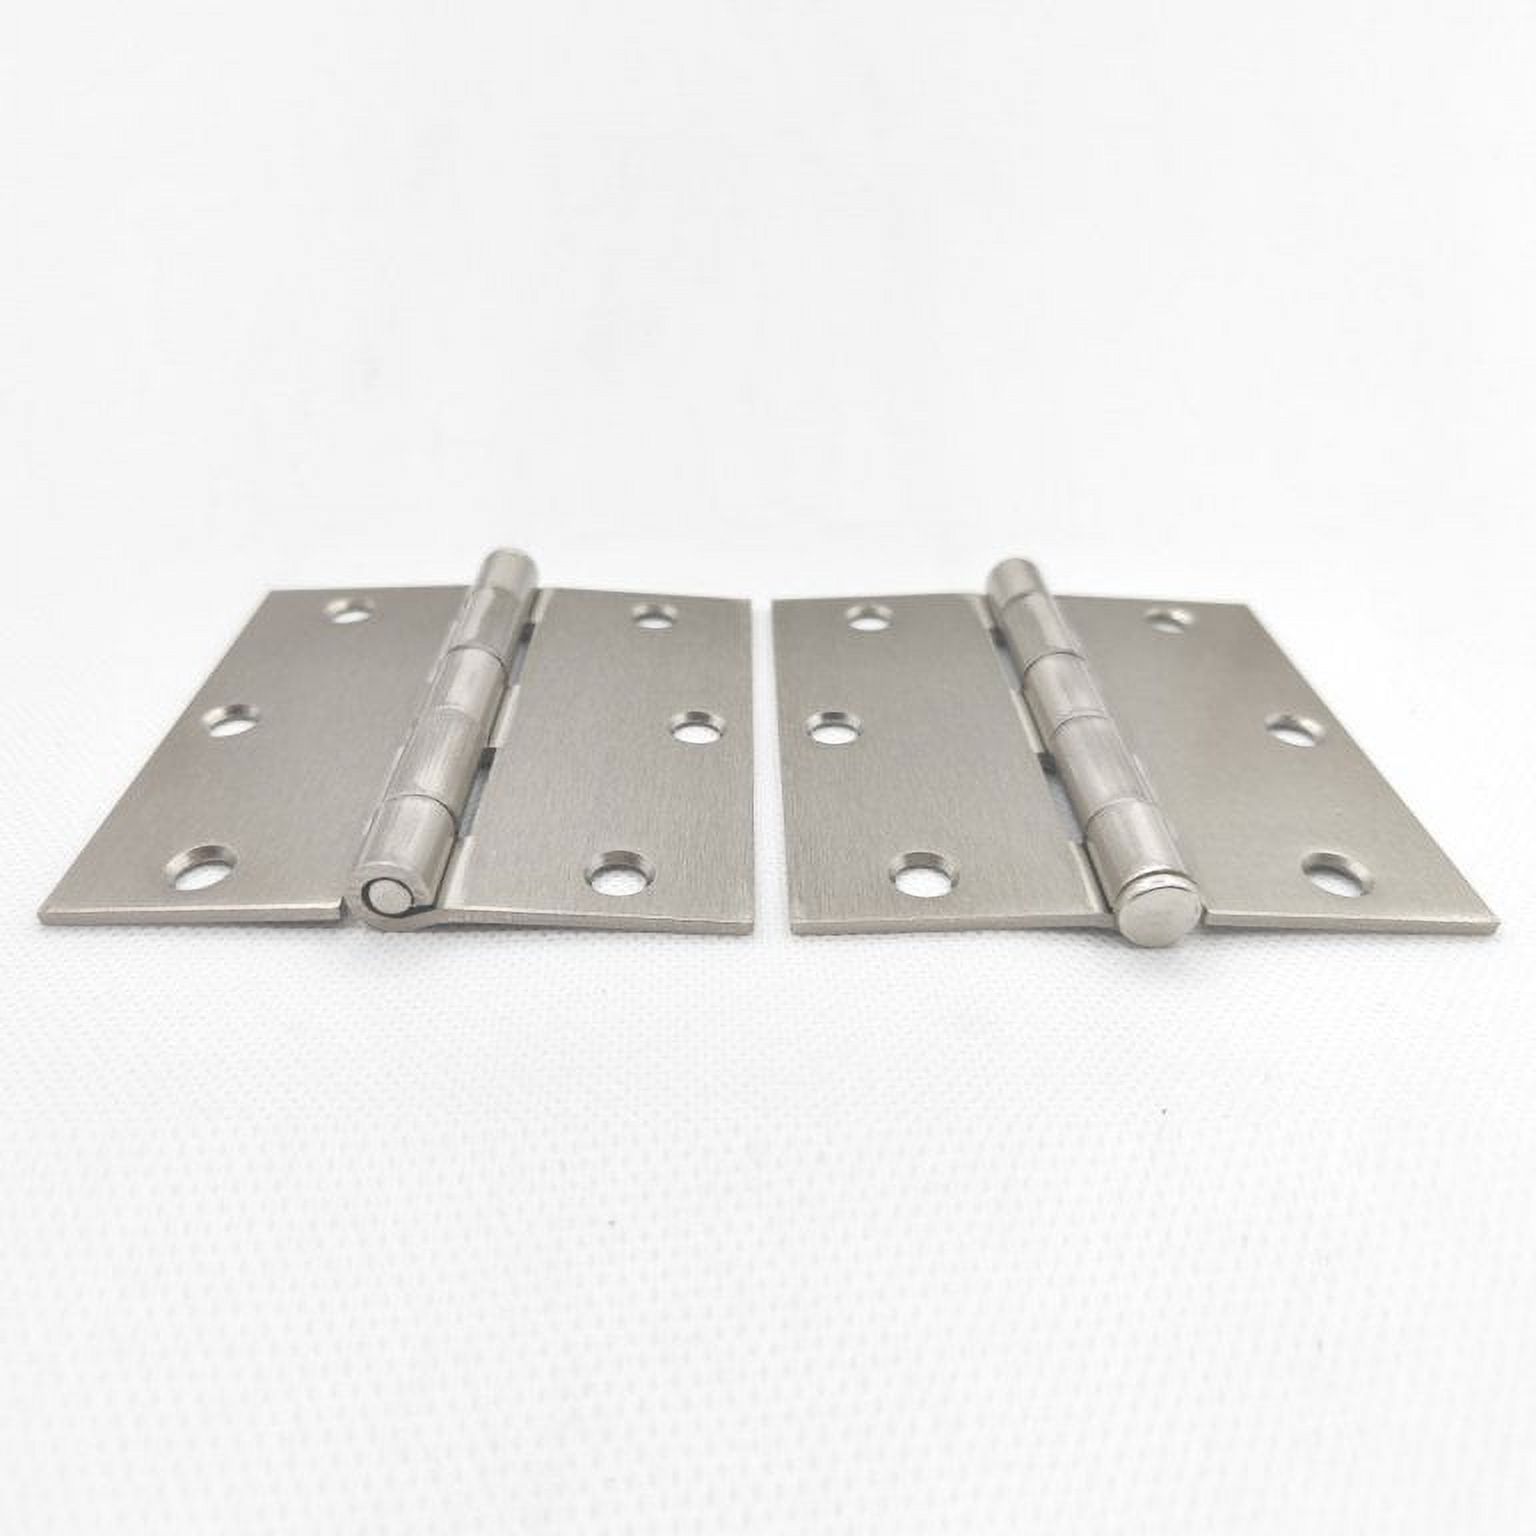 100 PACKS 3.5IN Steel Door Hinge Heavy Duty for Interior & Exterior Door, Square Corner,Thickness:2.2mm,Satin Nickel,Removable pin, with Screws - image 2 of 5